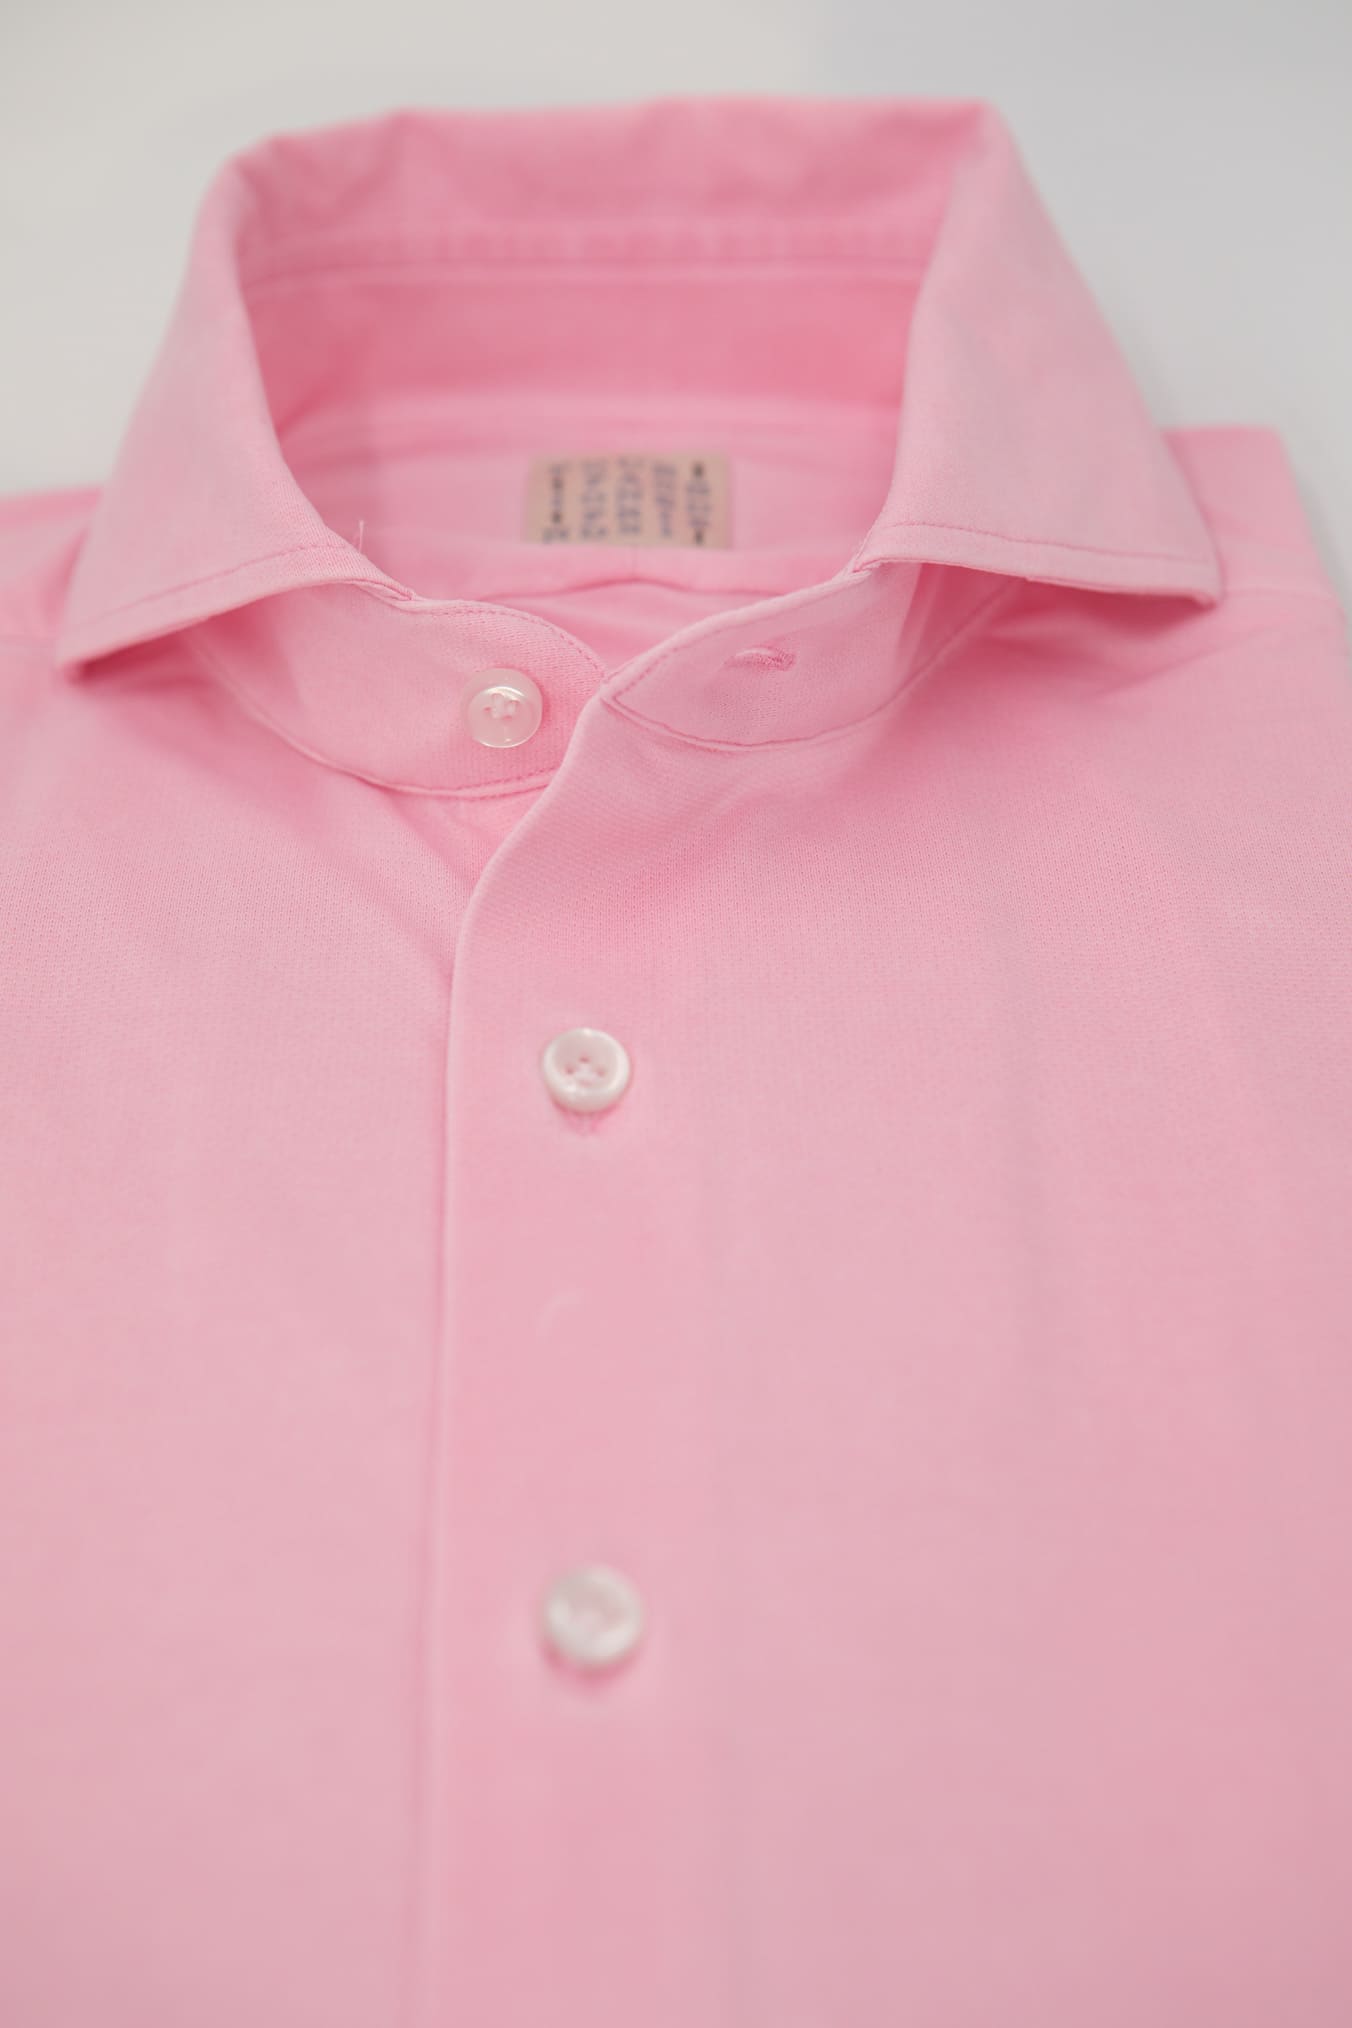 FFF Active Delavé Pink Shirt